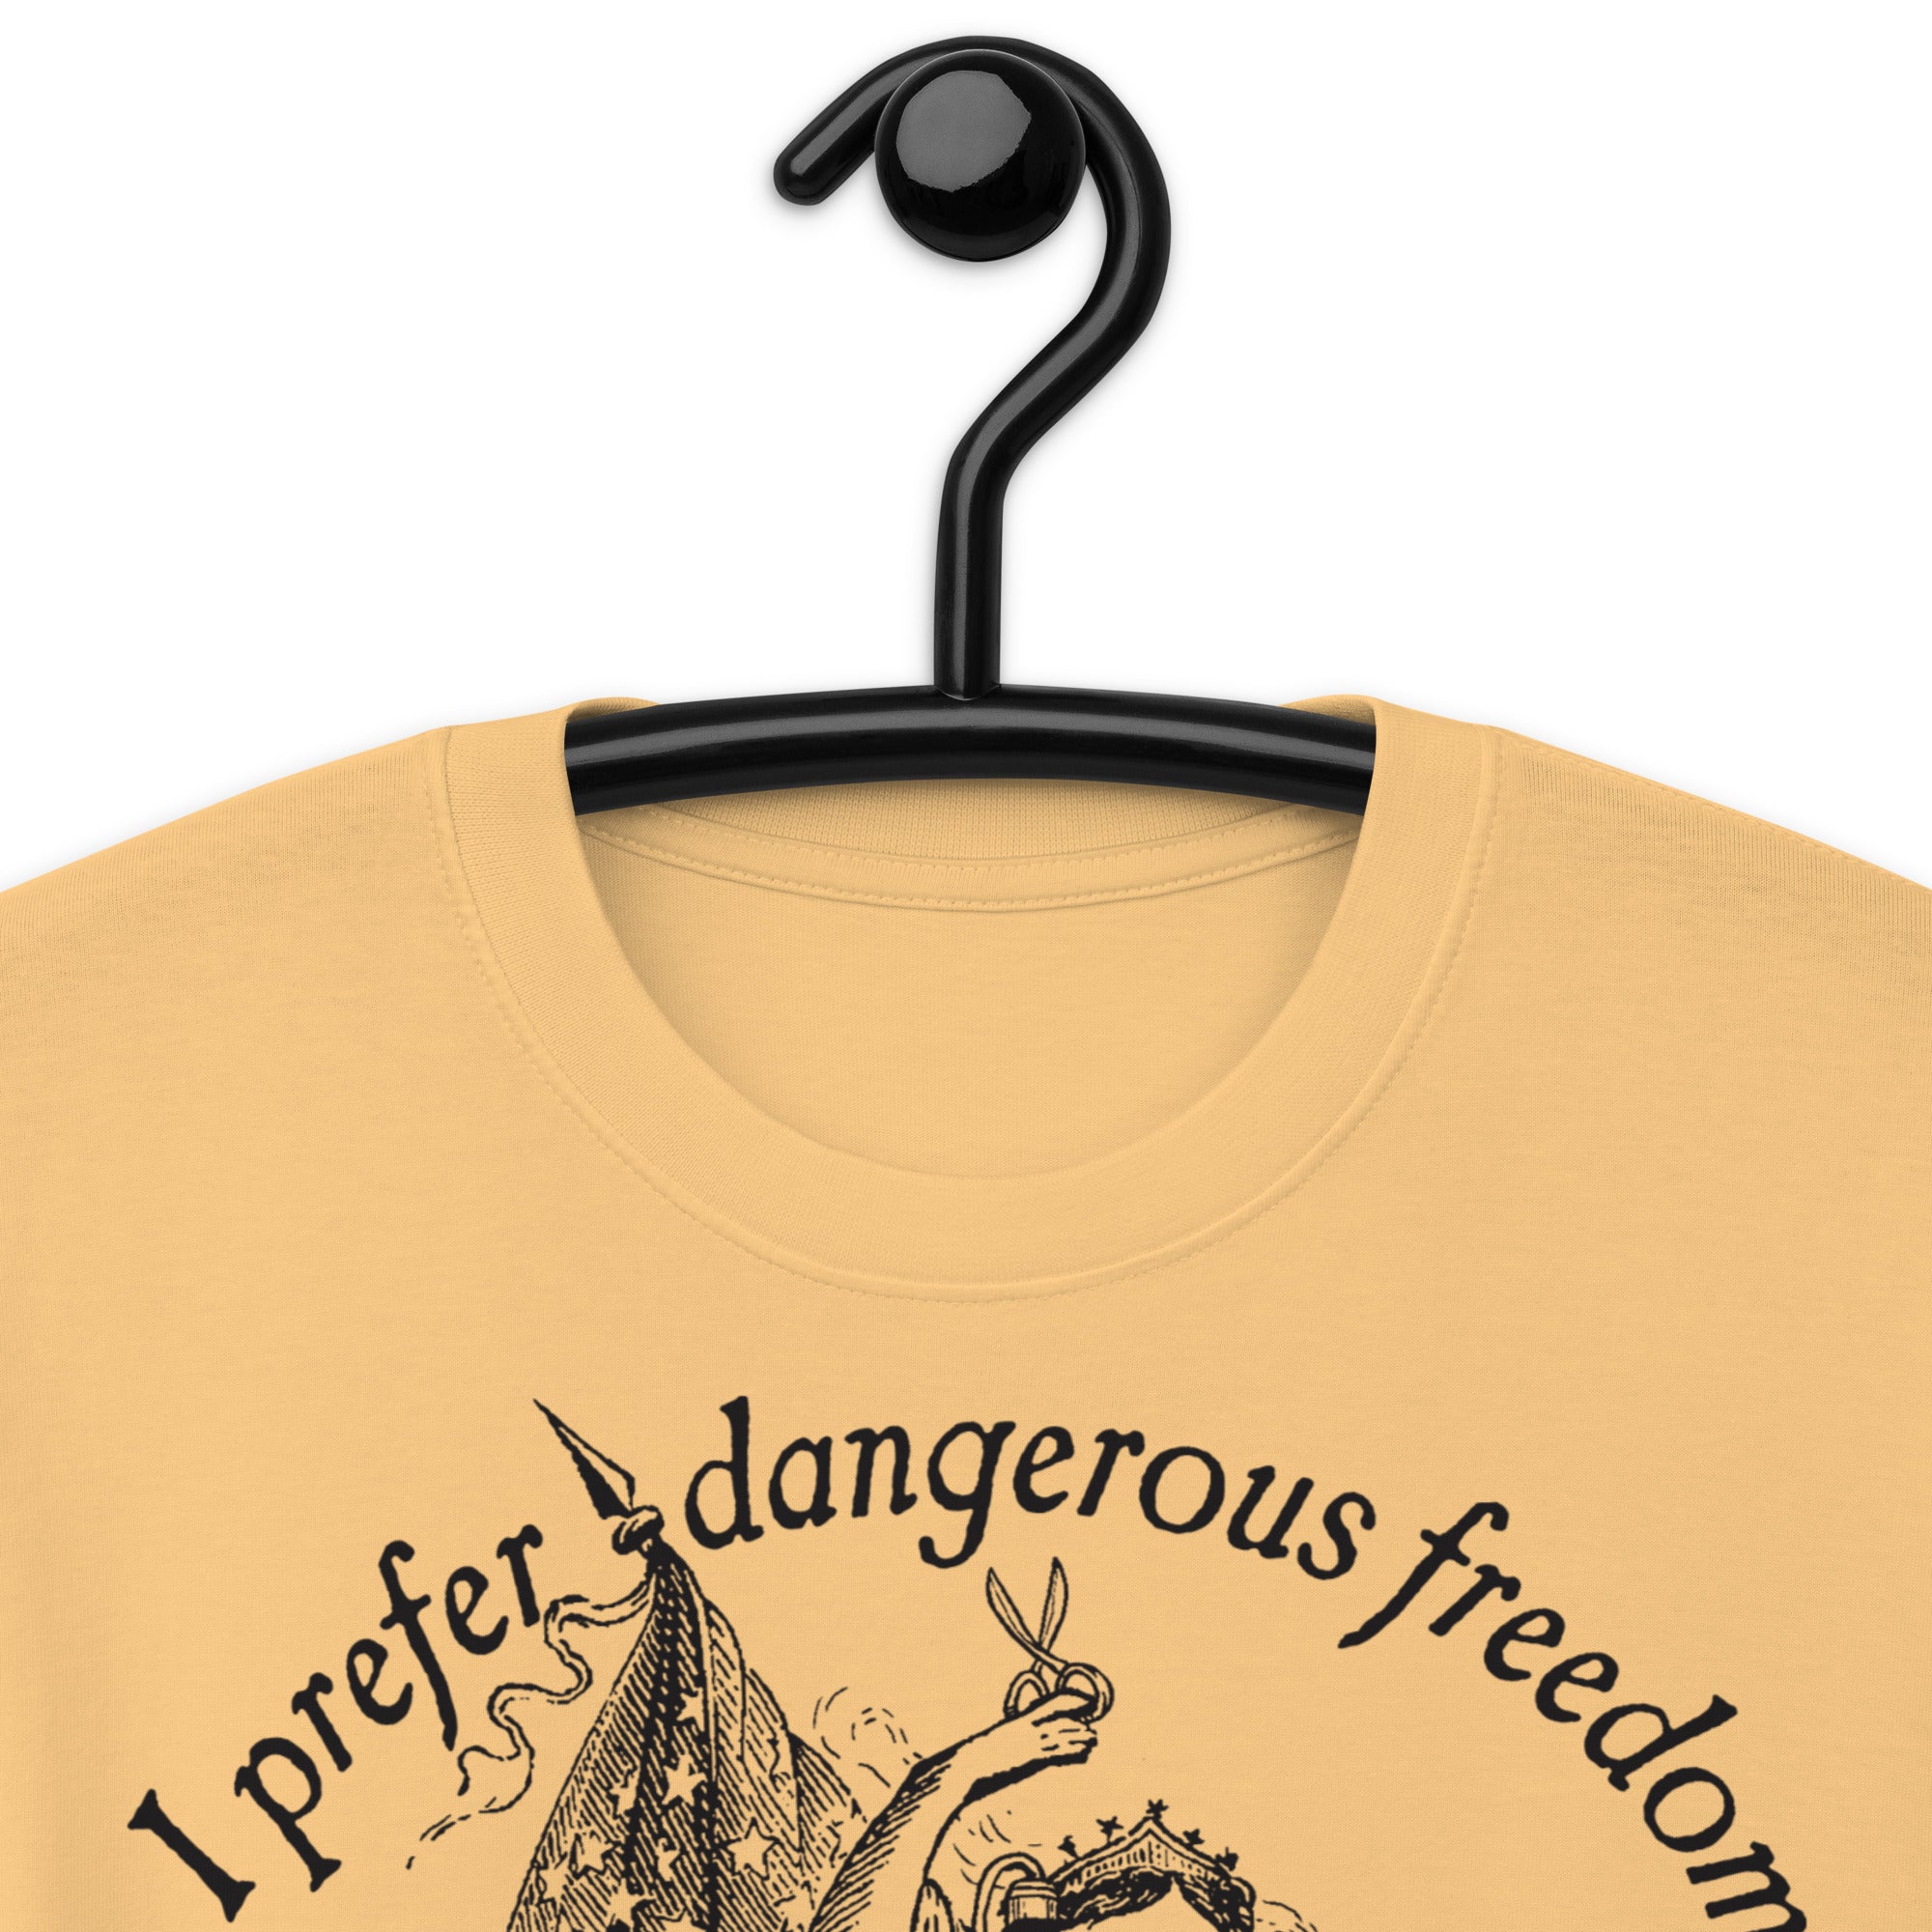 I Prefer Dangerous Freedom Jefferson Quote Men’s Heavyweight T-shirt